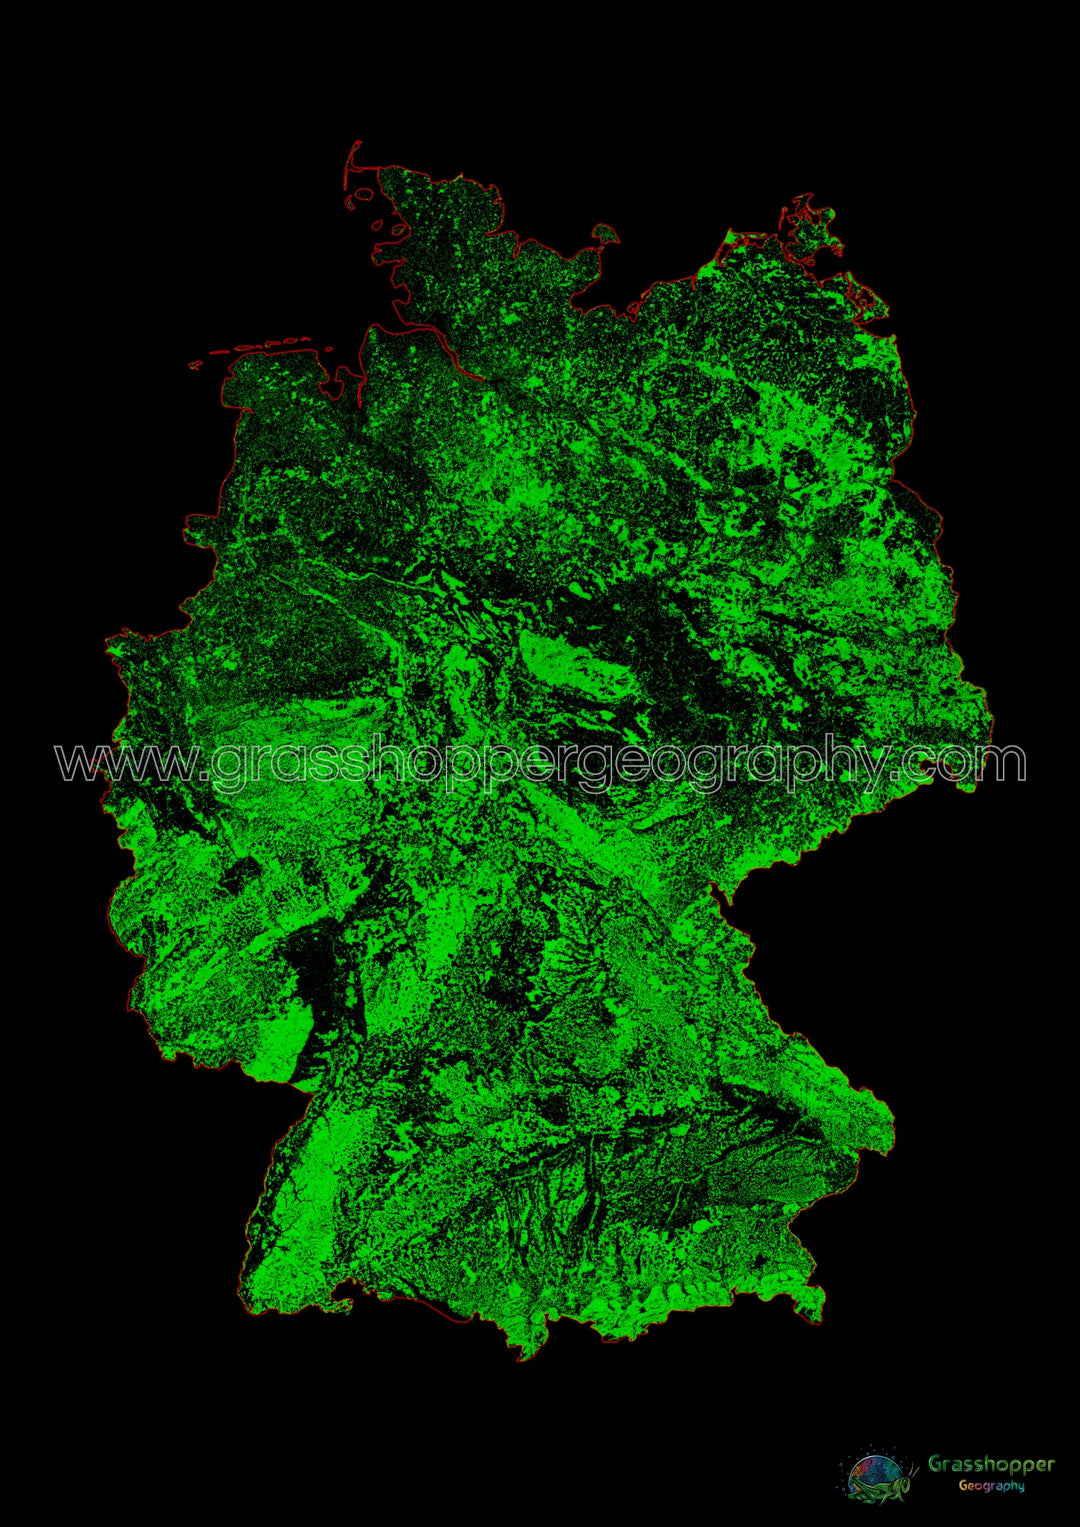 Allemagne - Carte du couvert forestier - Tirage d'art